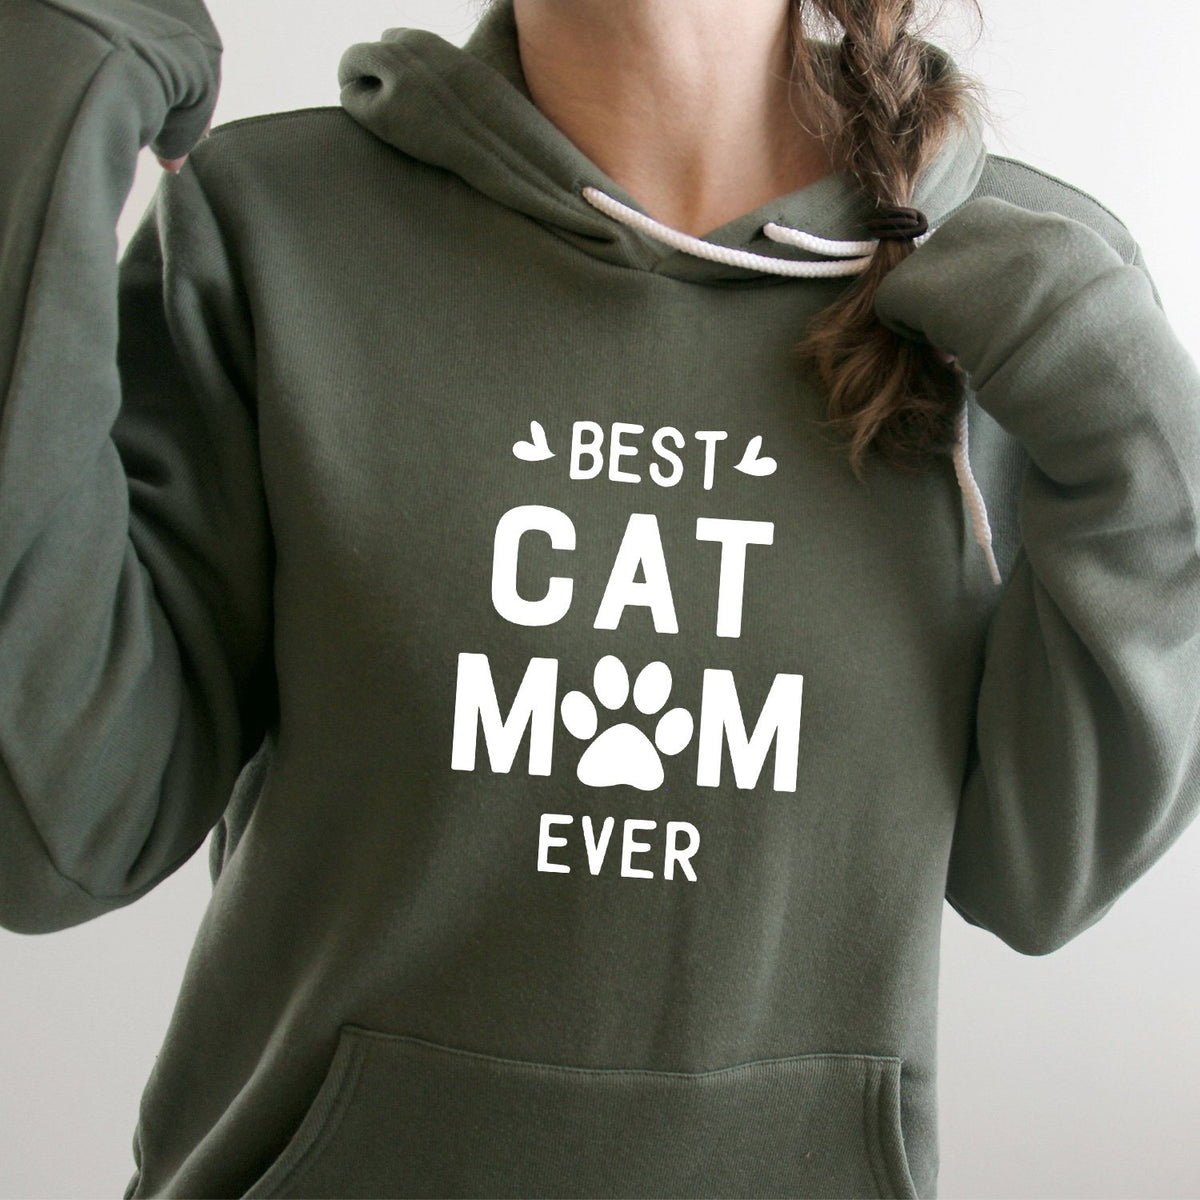 Best Cat Mom Ever - Hoodie Sweatshirt